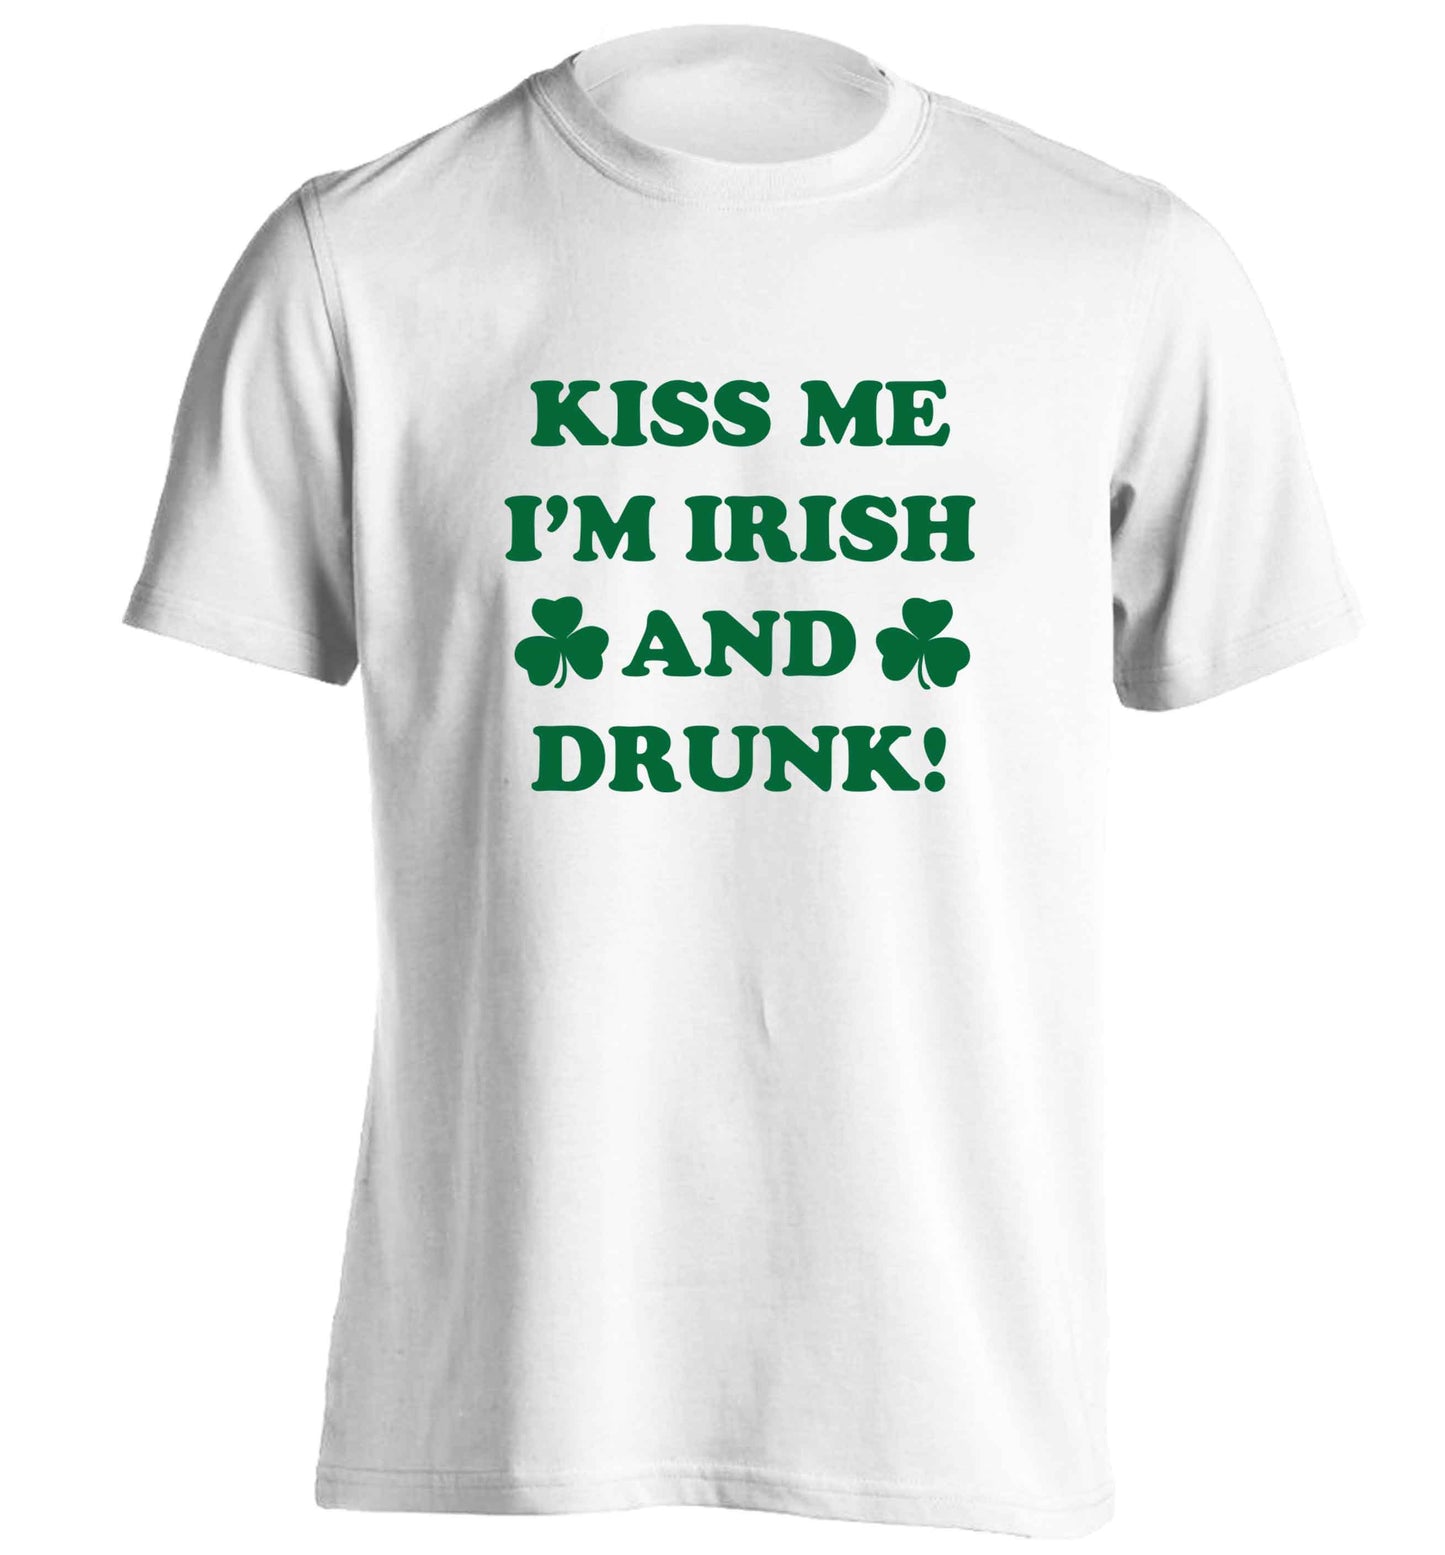 Kiss me I'm Irish and drunk adults unisex white Tshirt 2XL